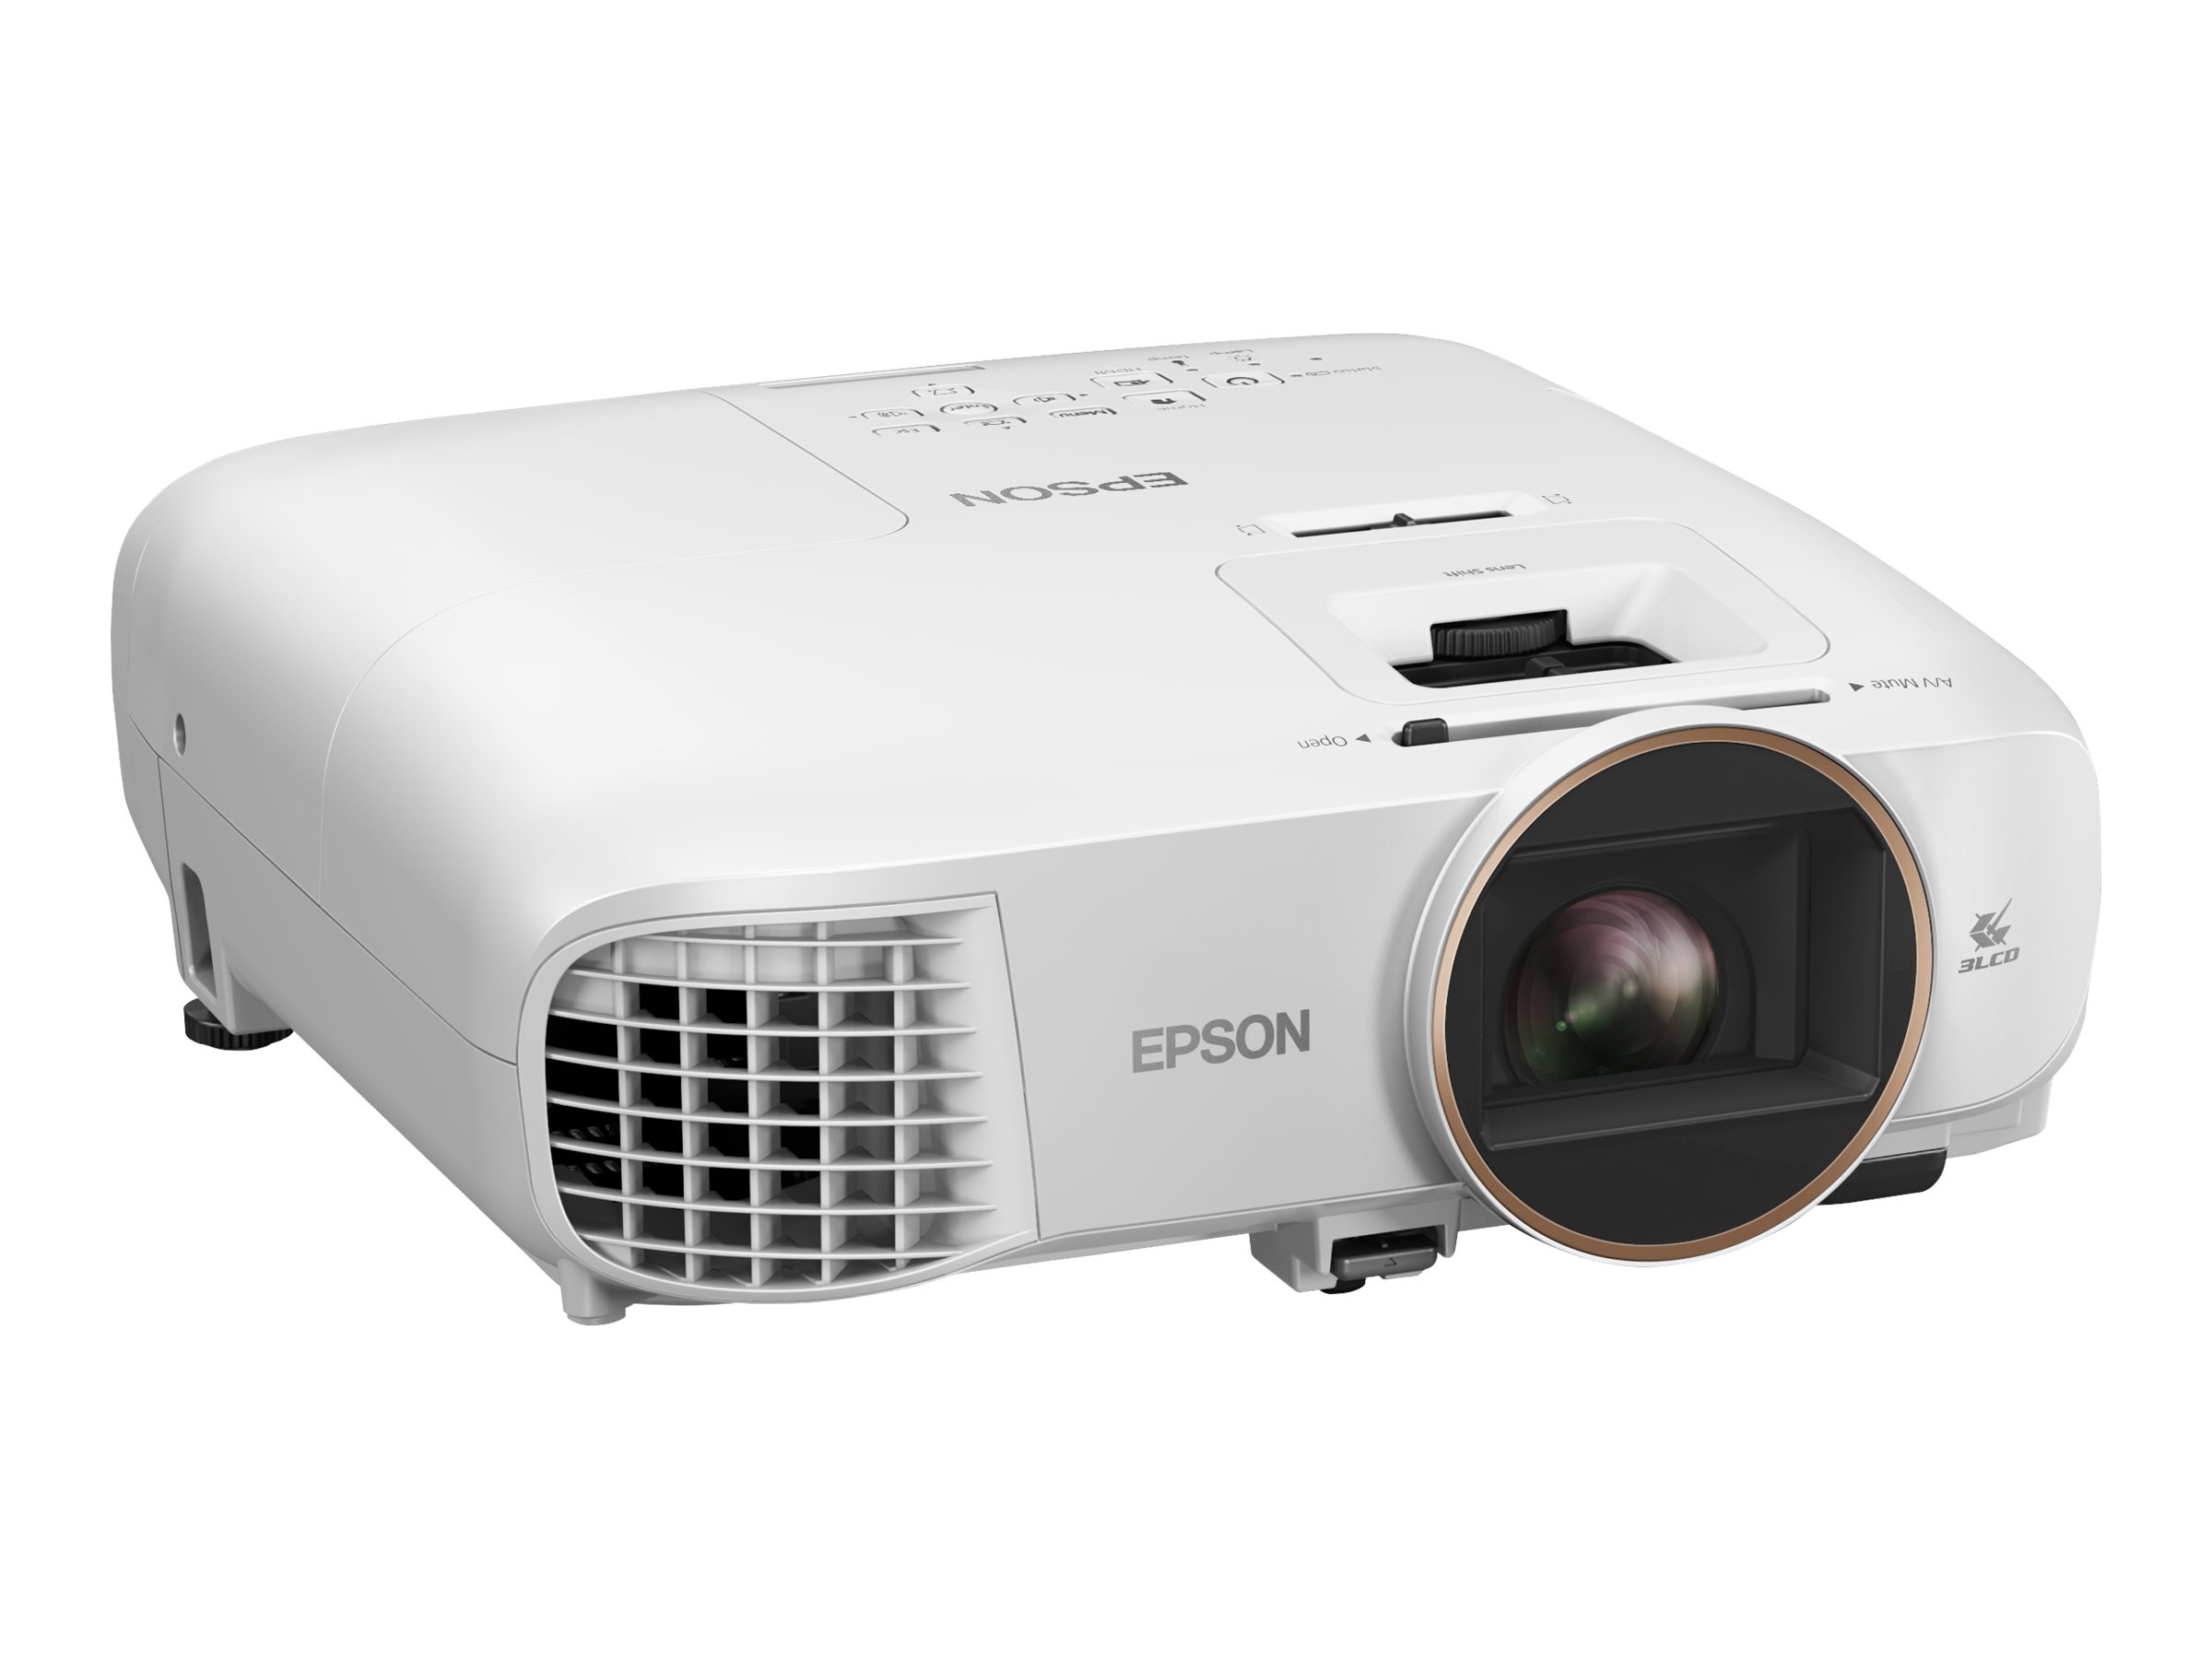 Epson EH-TW5820 - Projecteur 3LCD - 3D - 2700 lumens (blanc) - 2700 lumens (couleur) - Full HD (1920 x 1080) - 16:9 - 1080p - blanc - Android TV - V11HA11040 - Projecteurs LCD